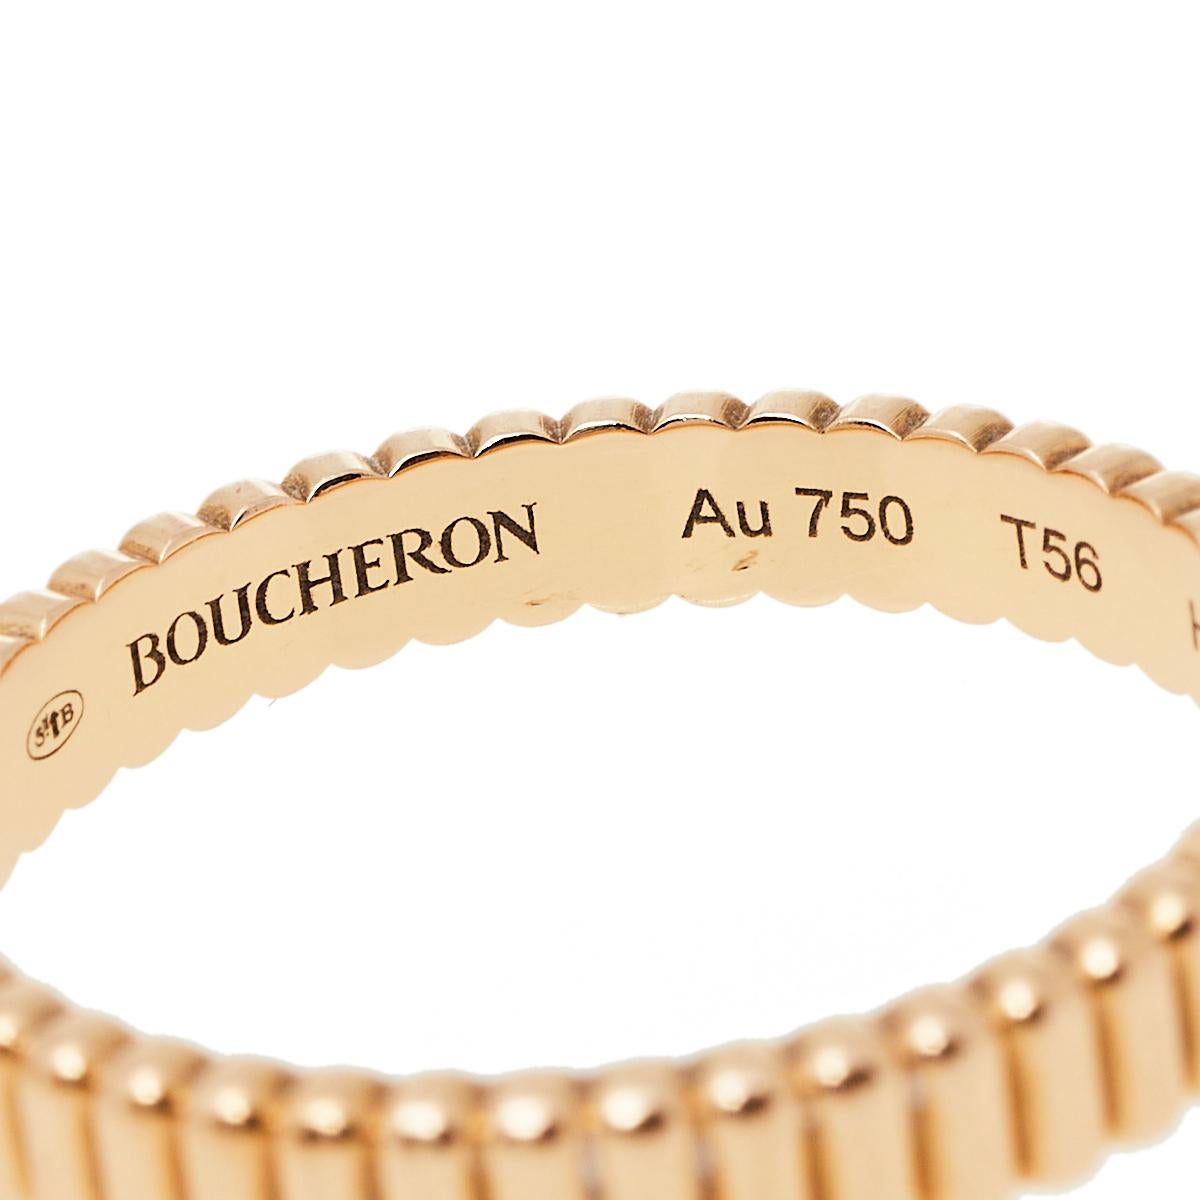 Contemporary Boucheron Grosgrain 18K Rose Gold Wedding Band Ring Size 56